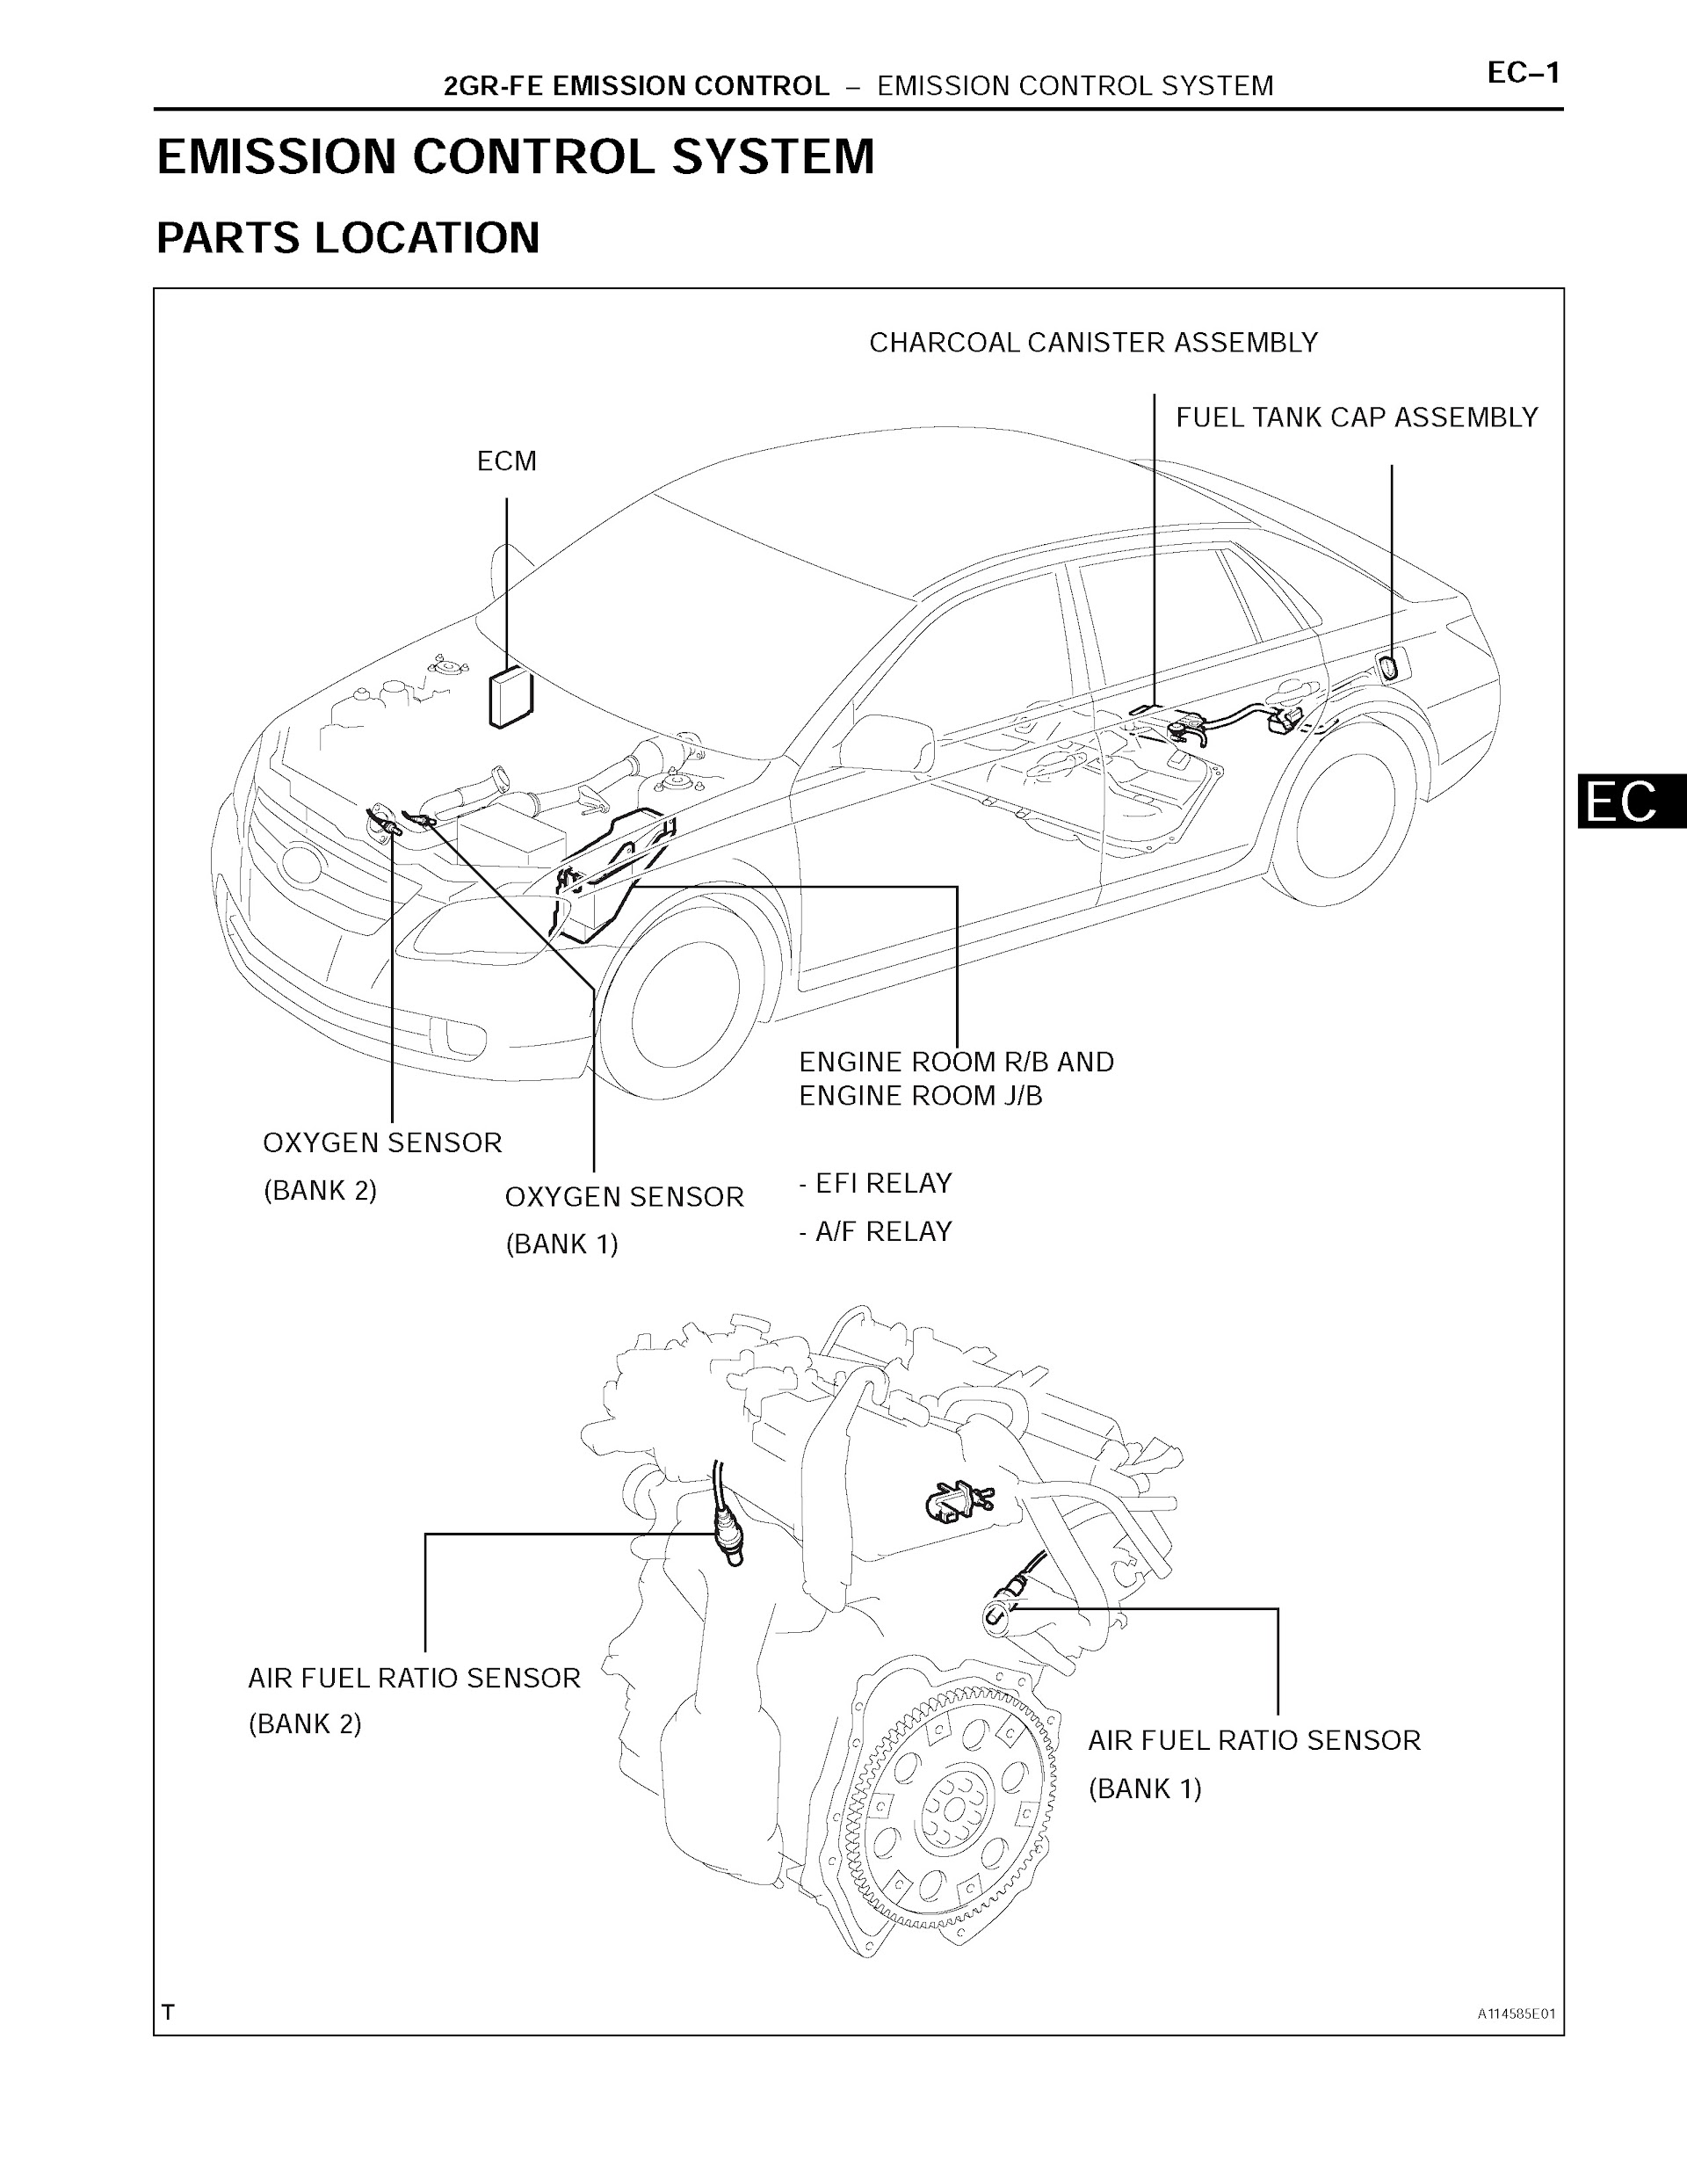 2006 Toyota Avalon Repair Manual